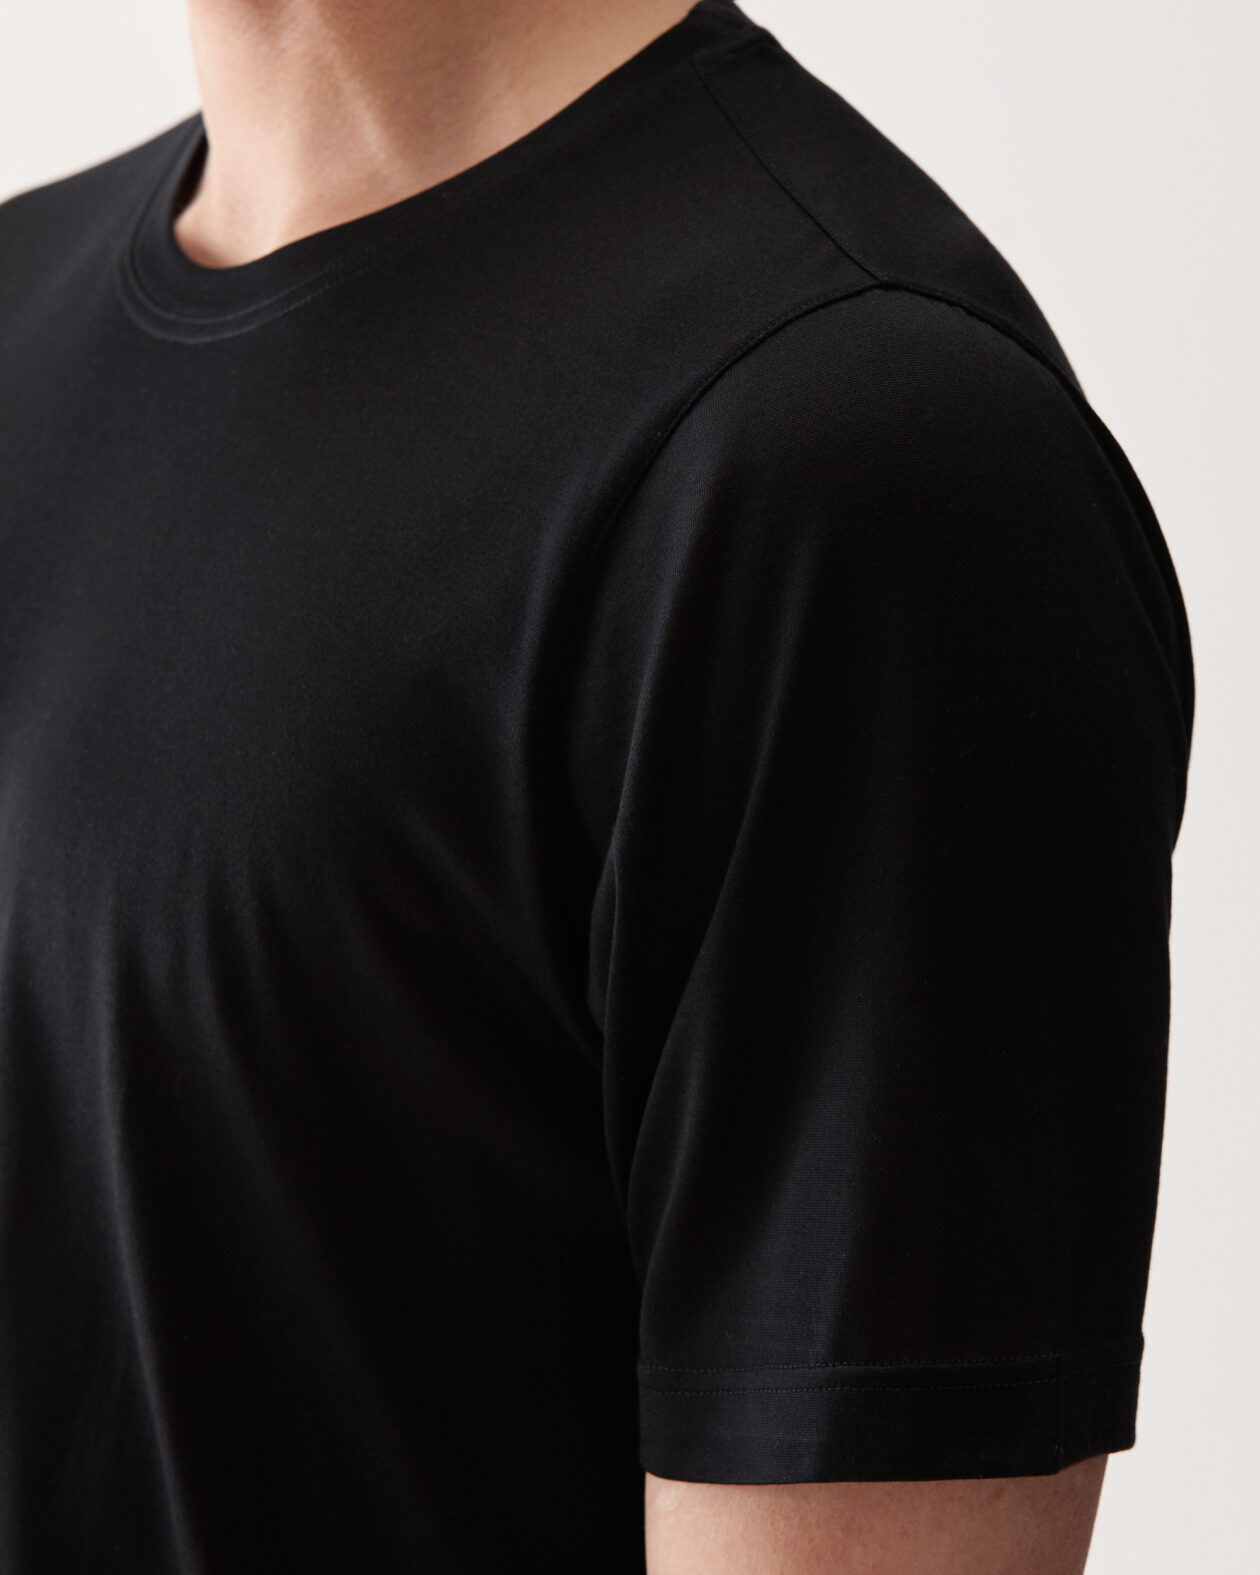 T-Shirt Silk Black